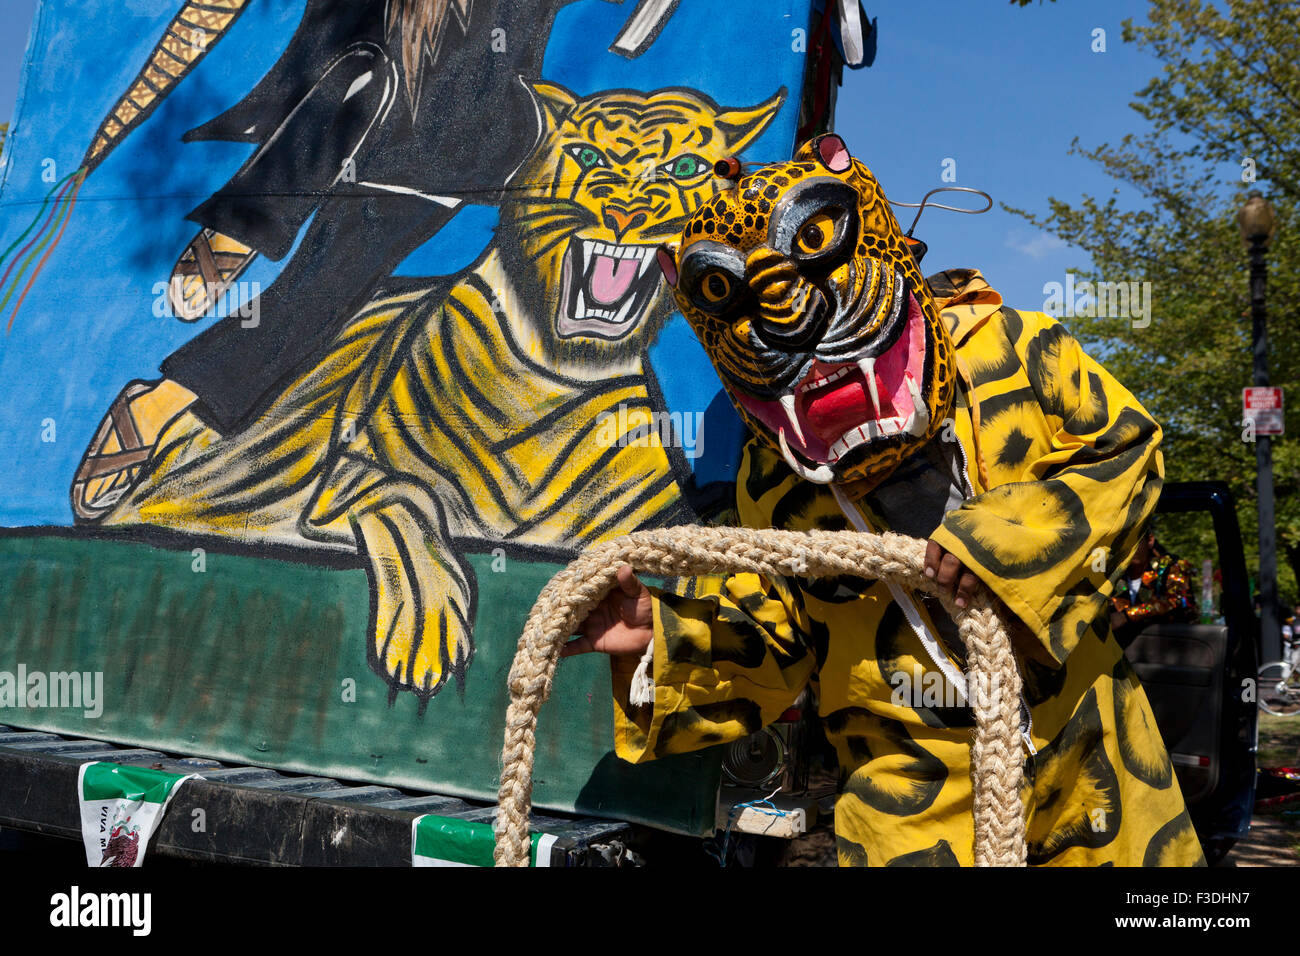 Danza de los Tecuanes (Mexikanische traditionelle Volkstanz) Performer in Tiger Kostüm während des nationalen Latino Festival 2015 - Washington, DC, USA Stockfoto